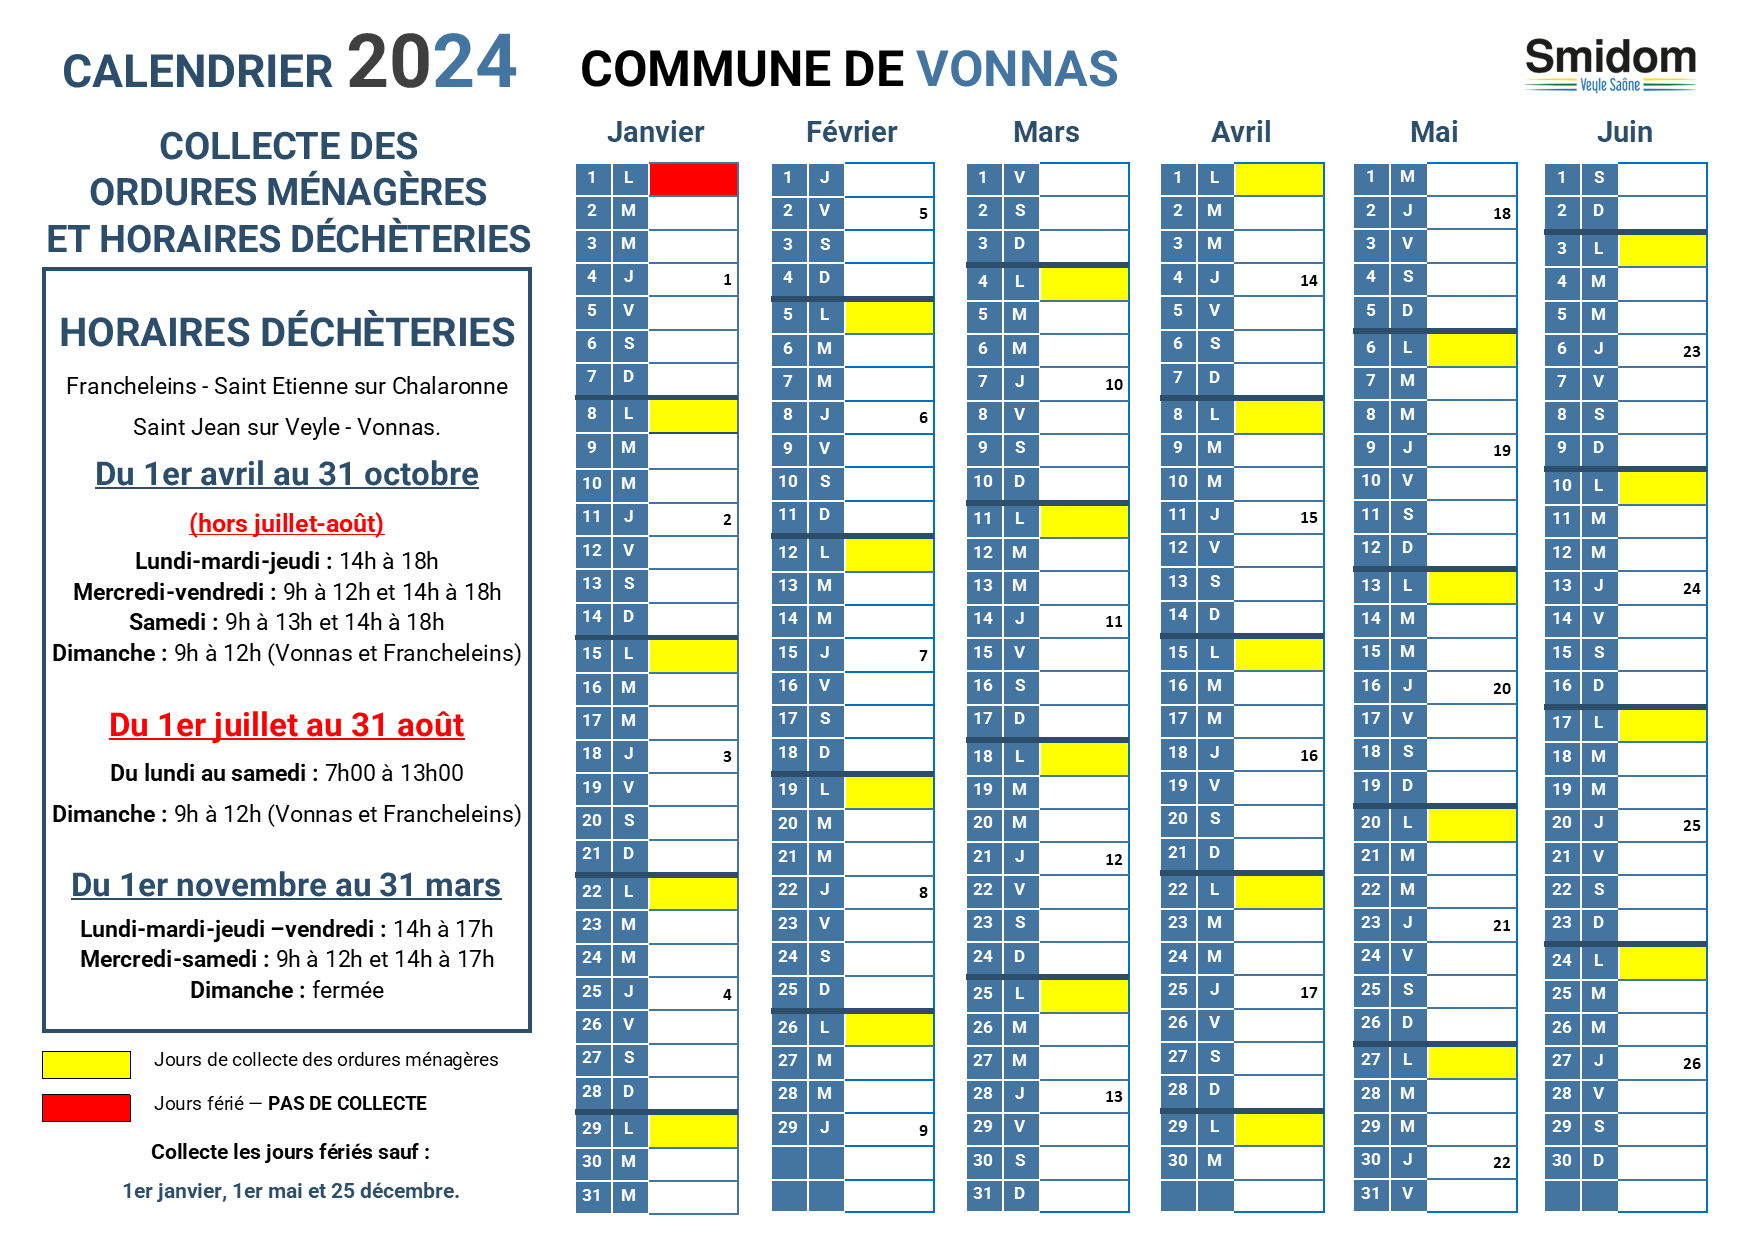 VONNAS - Calendrier 2024.png